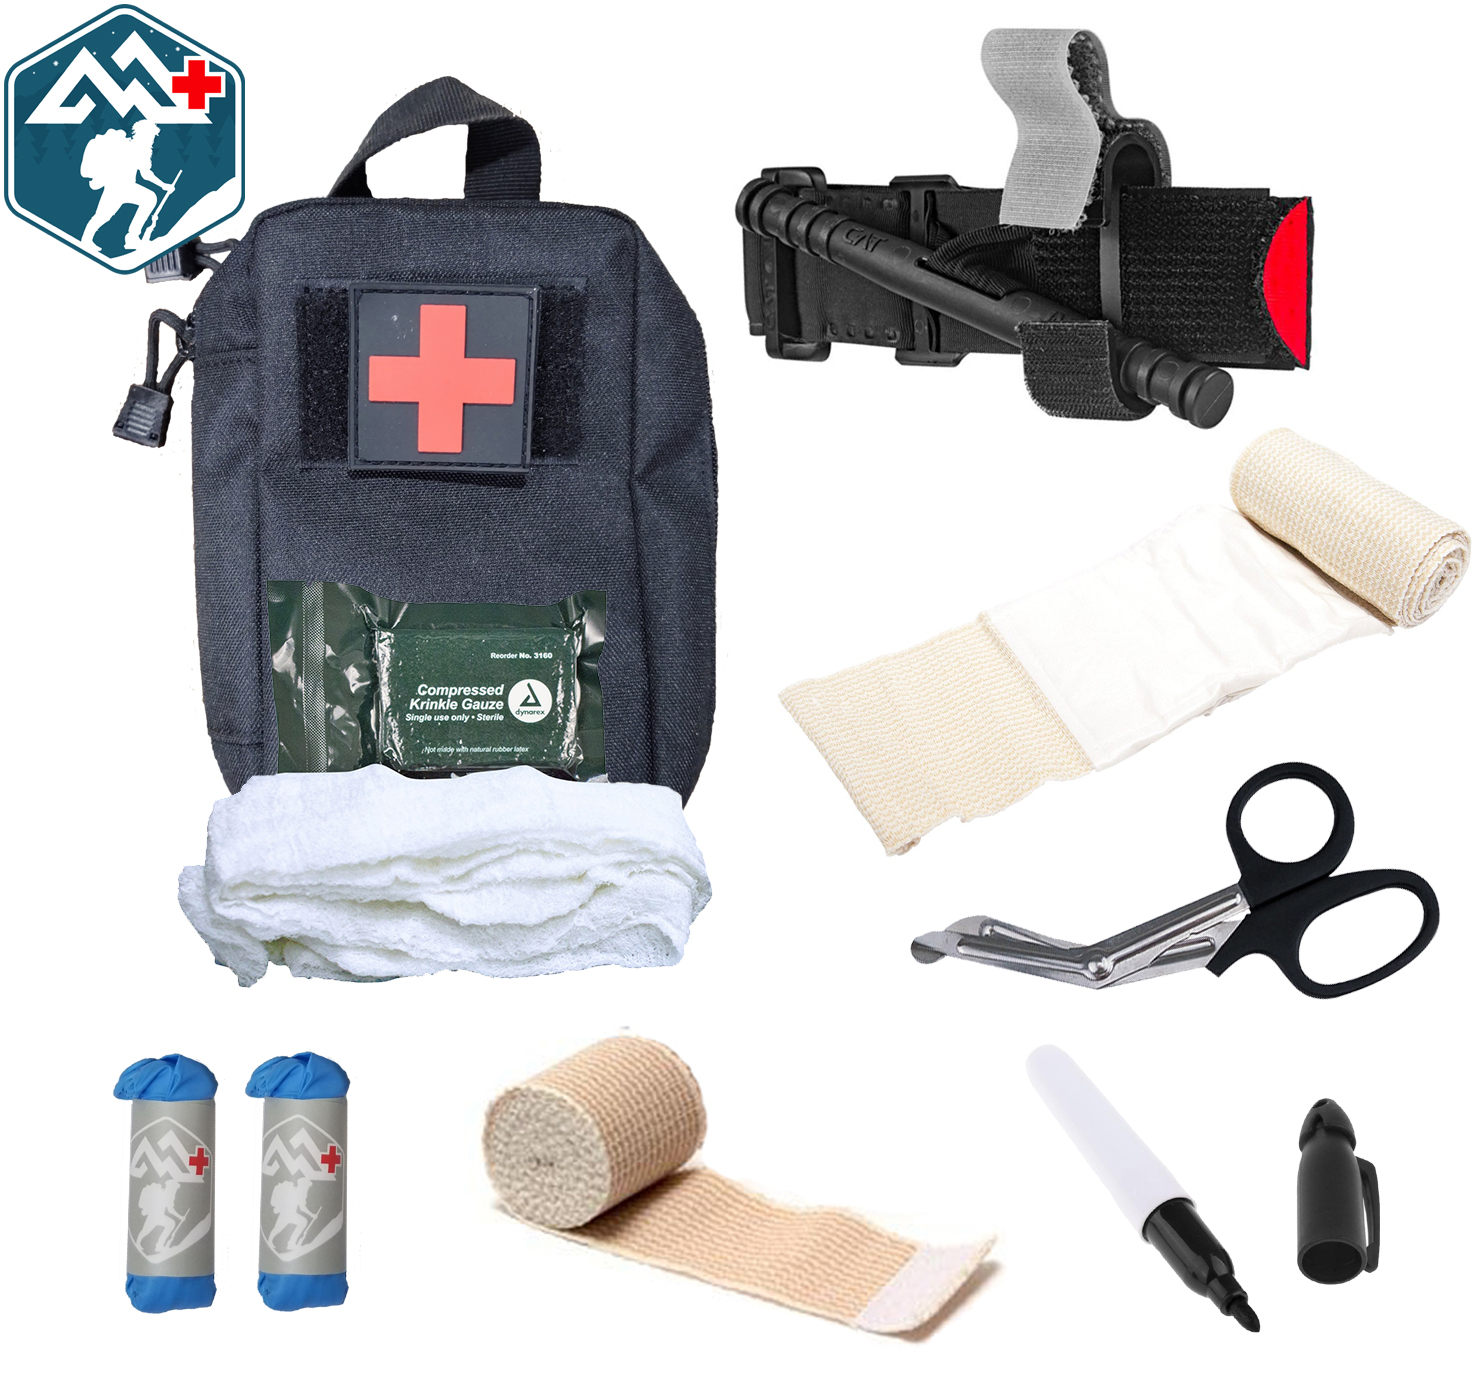 Range Trauma Kit - Casualty Care